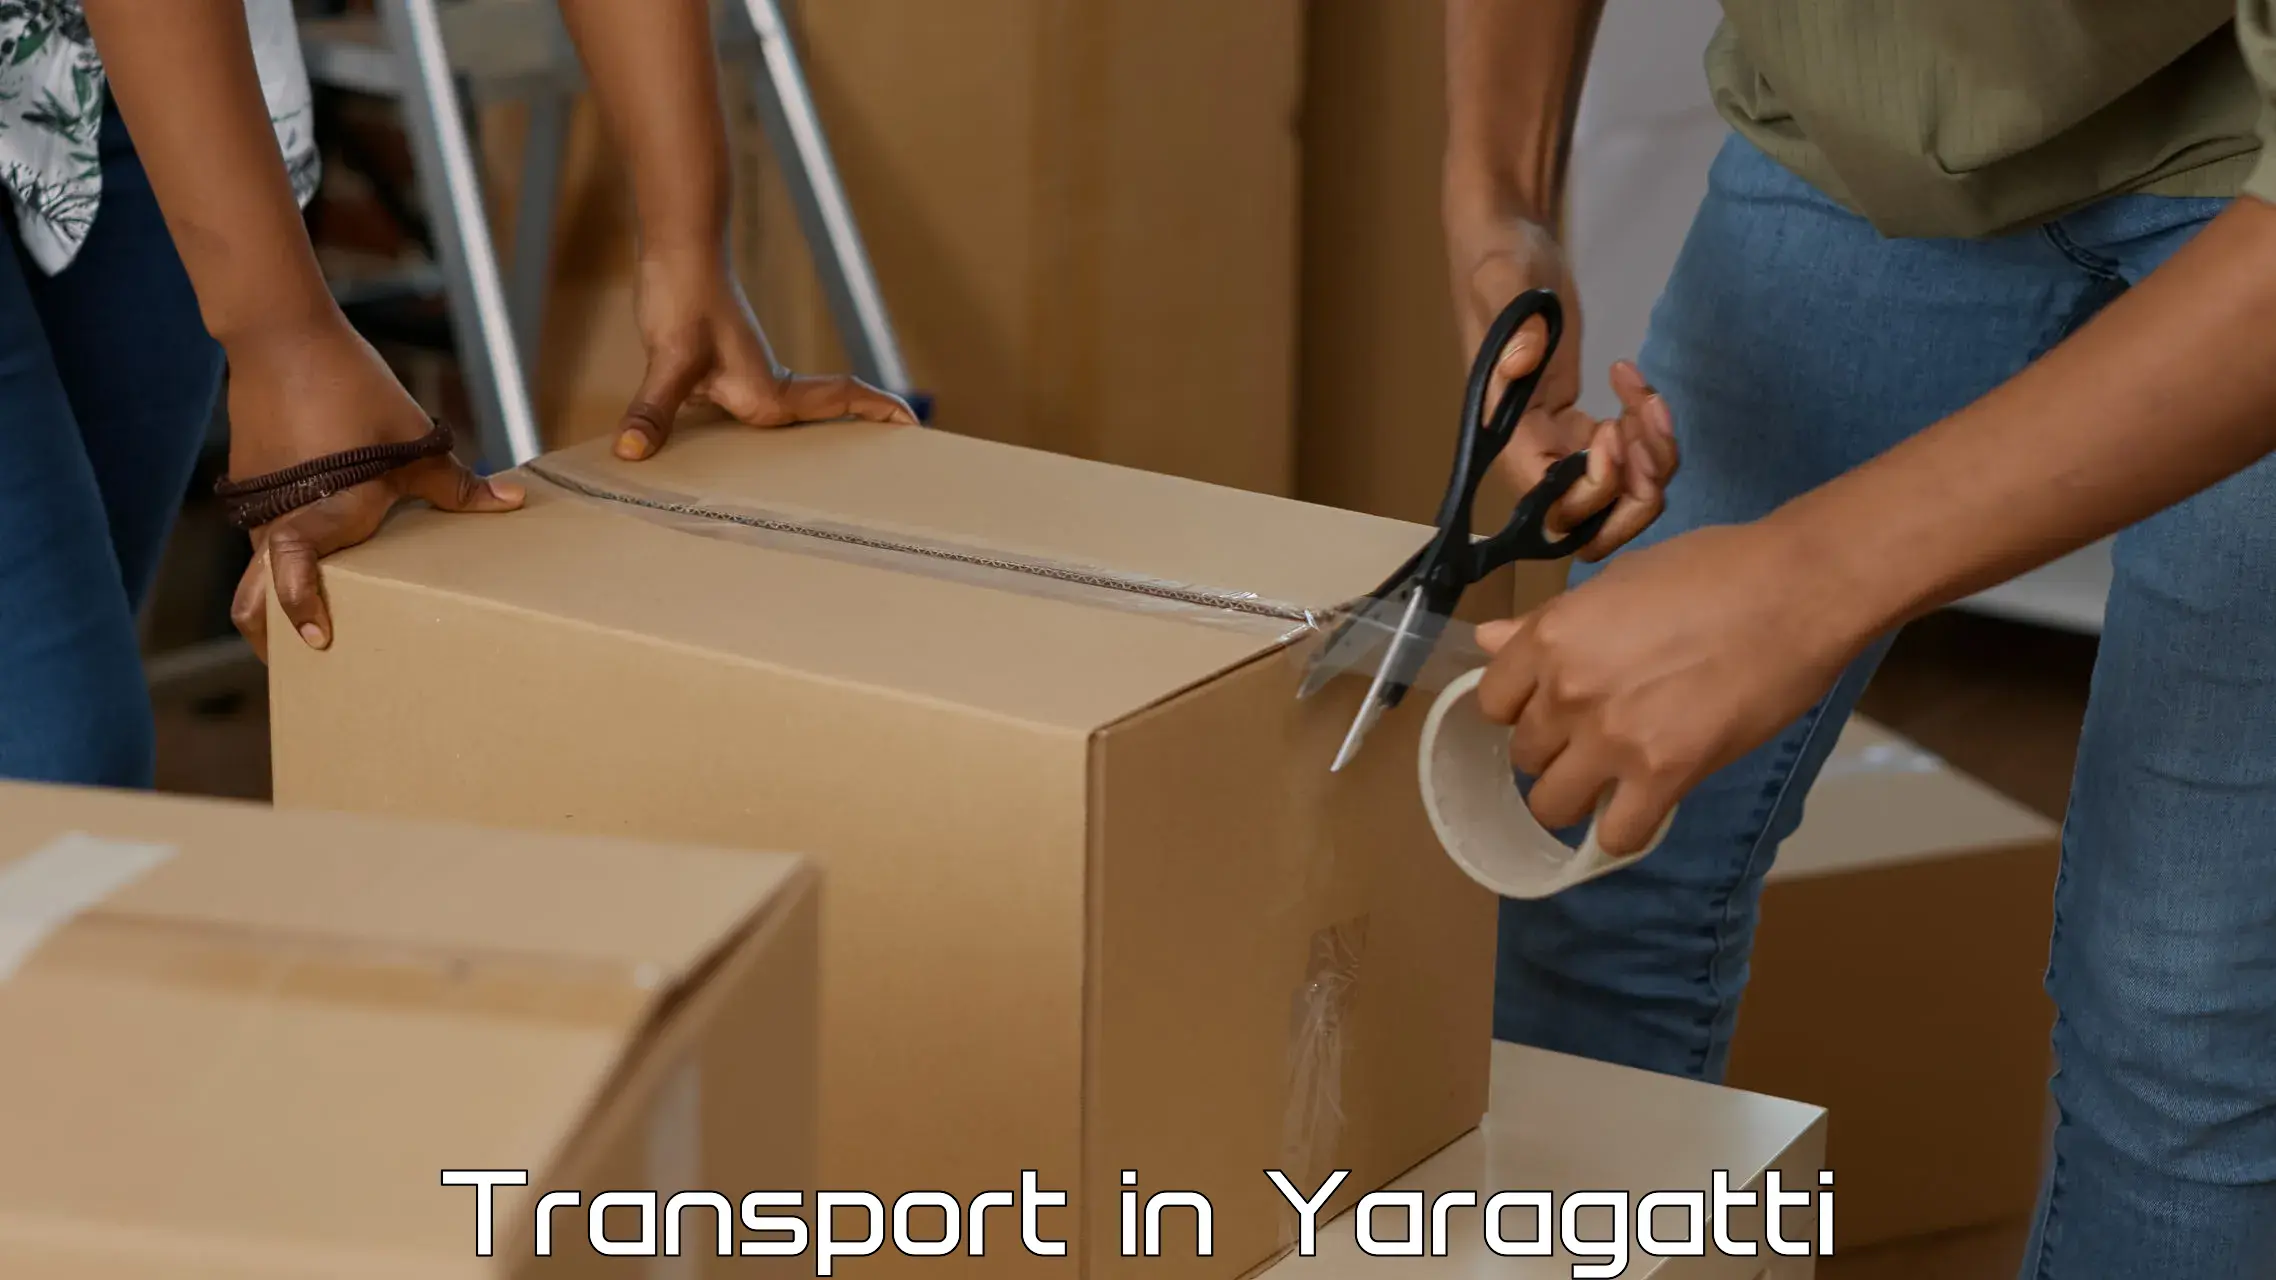 Cargo transport services in Yaragatti